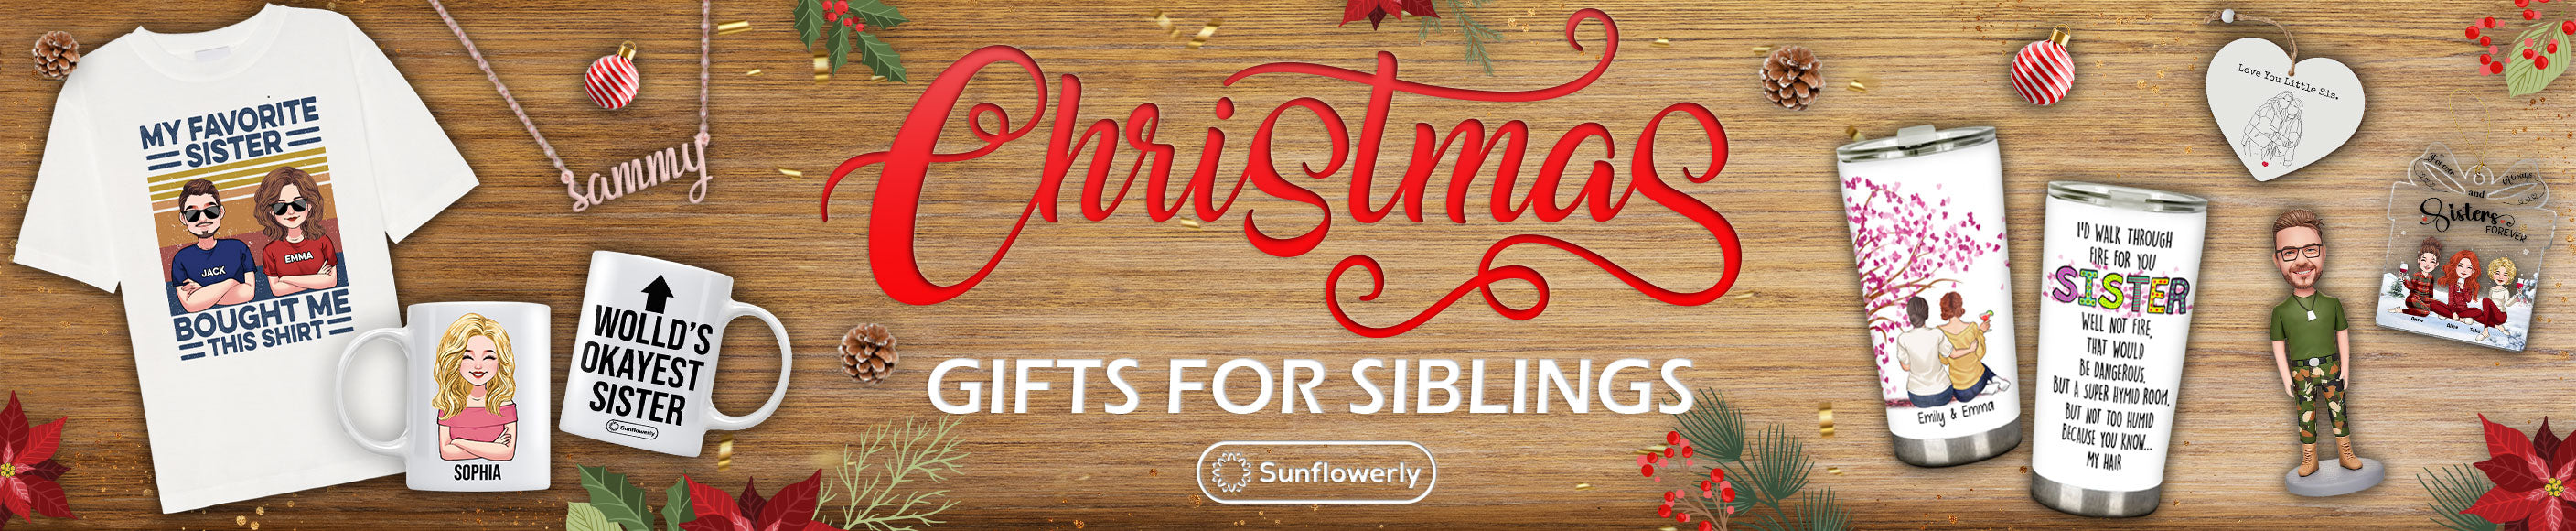 Christmas Banner For Siblings